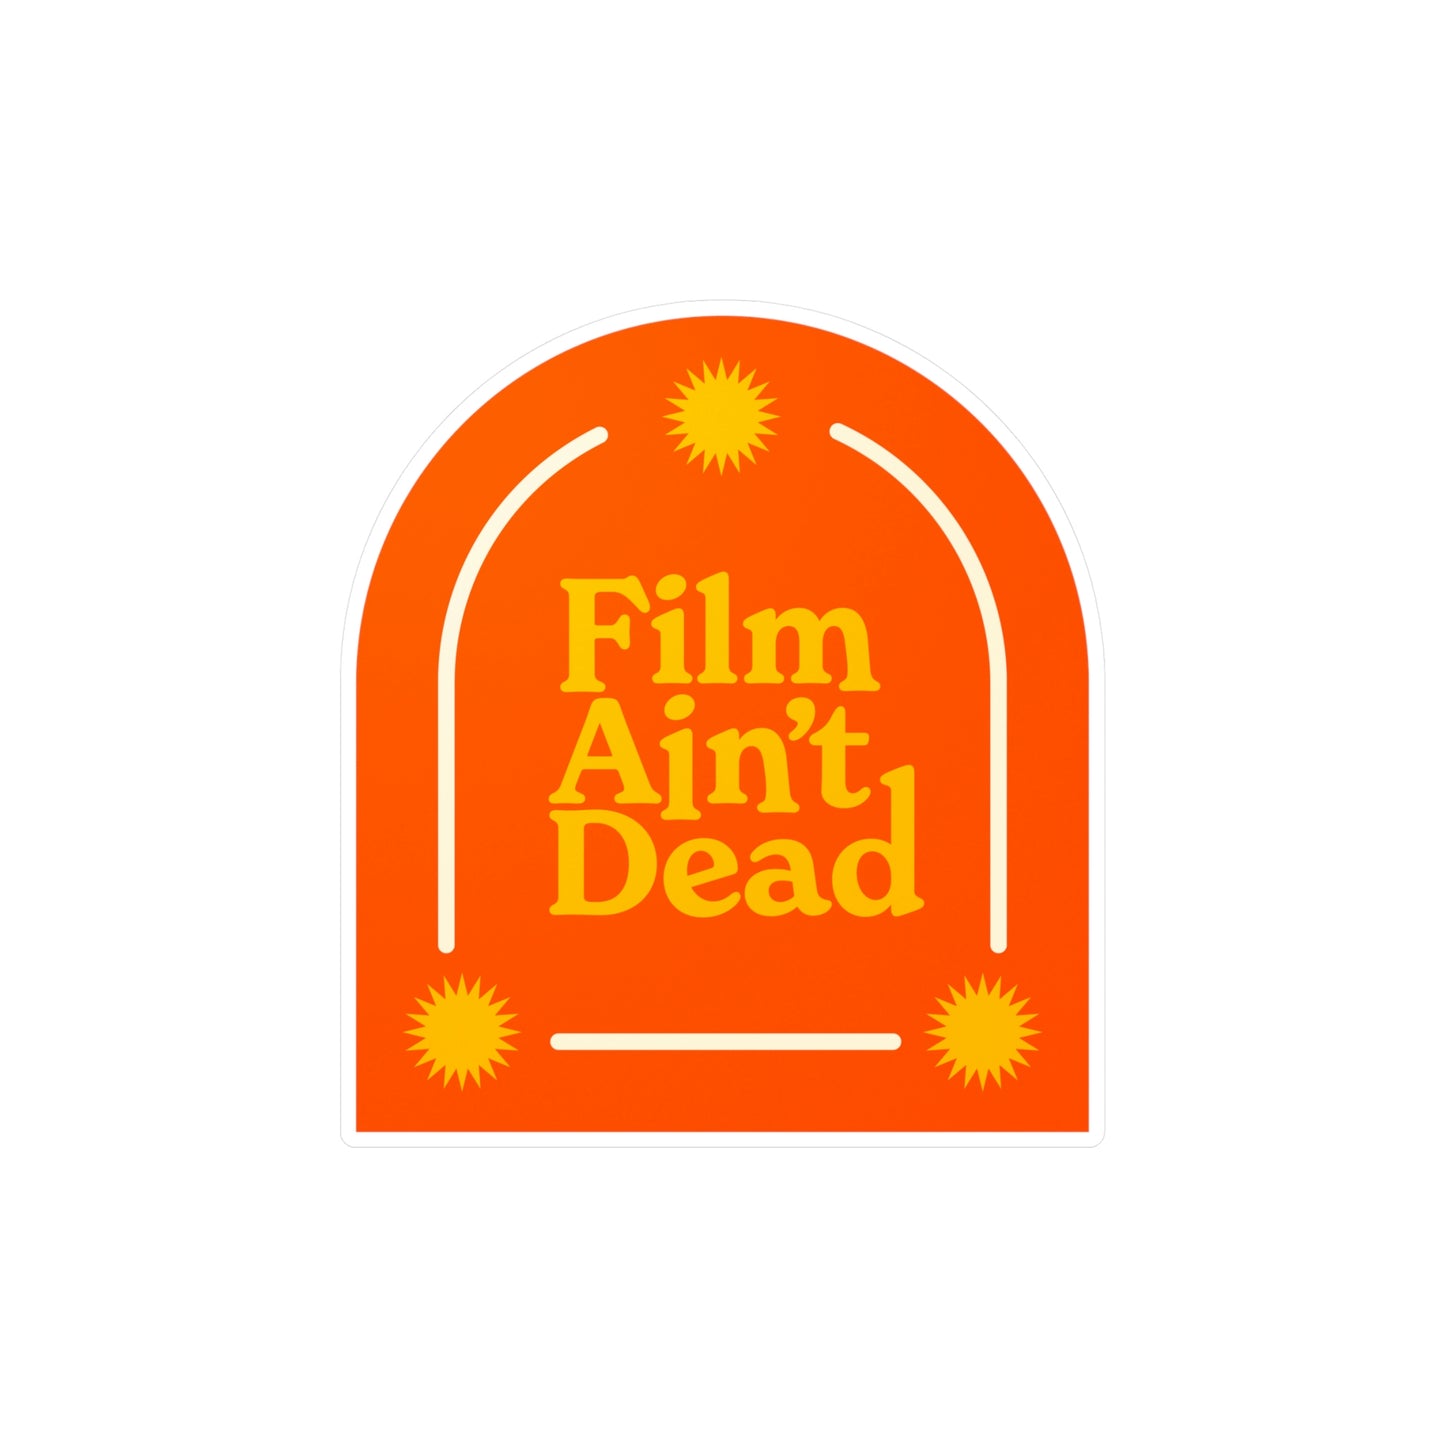 Film Photography Vinyl Sticker - 'Film Ain't Dead' - Orange